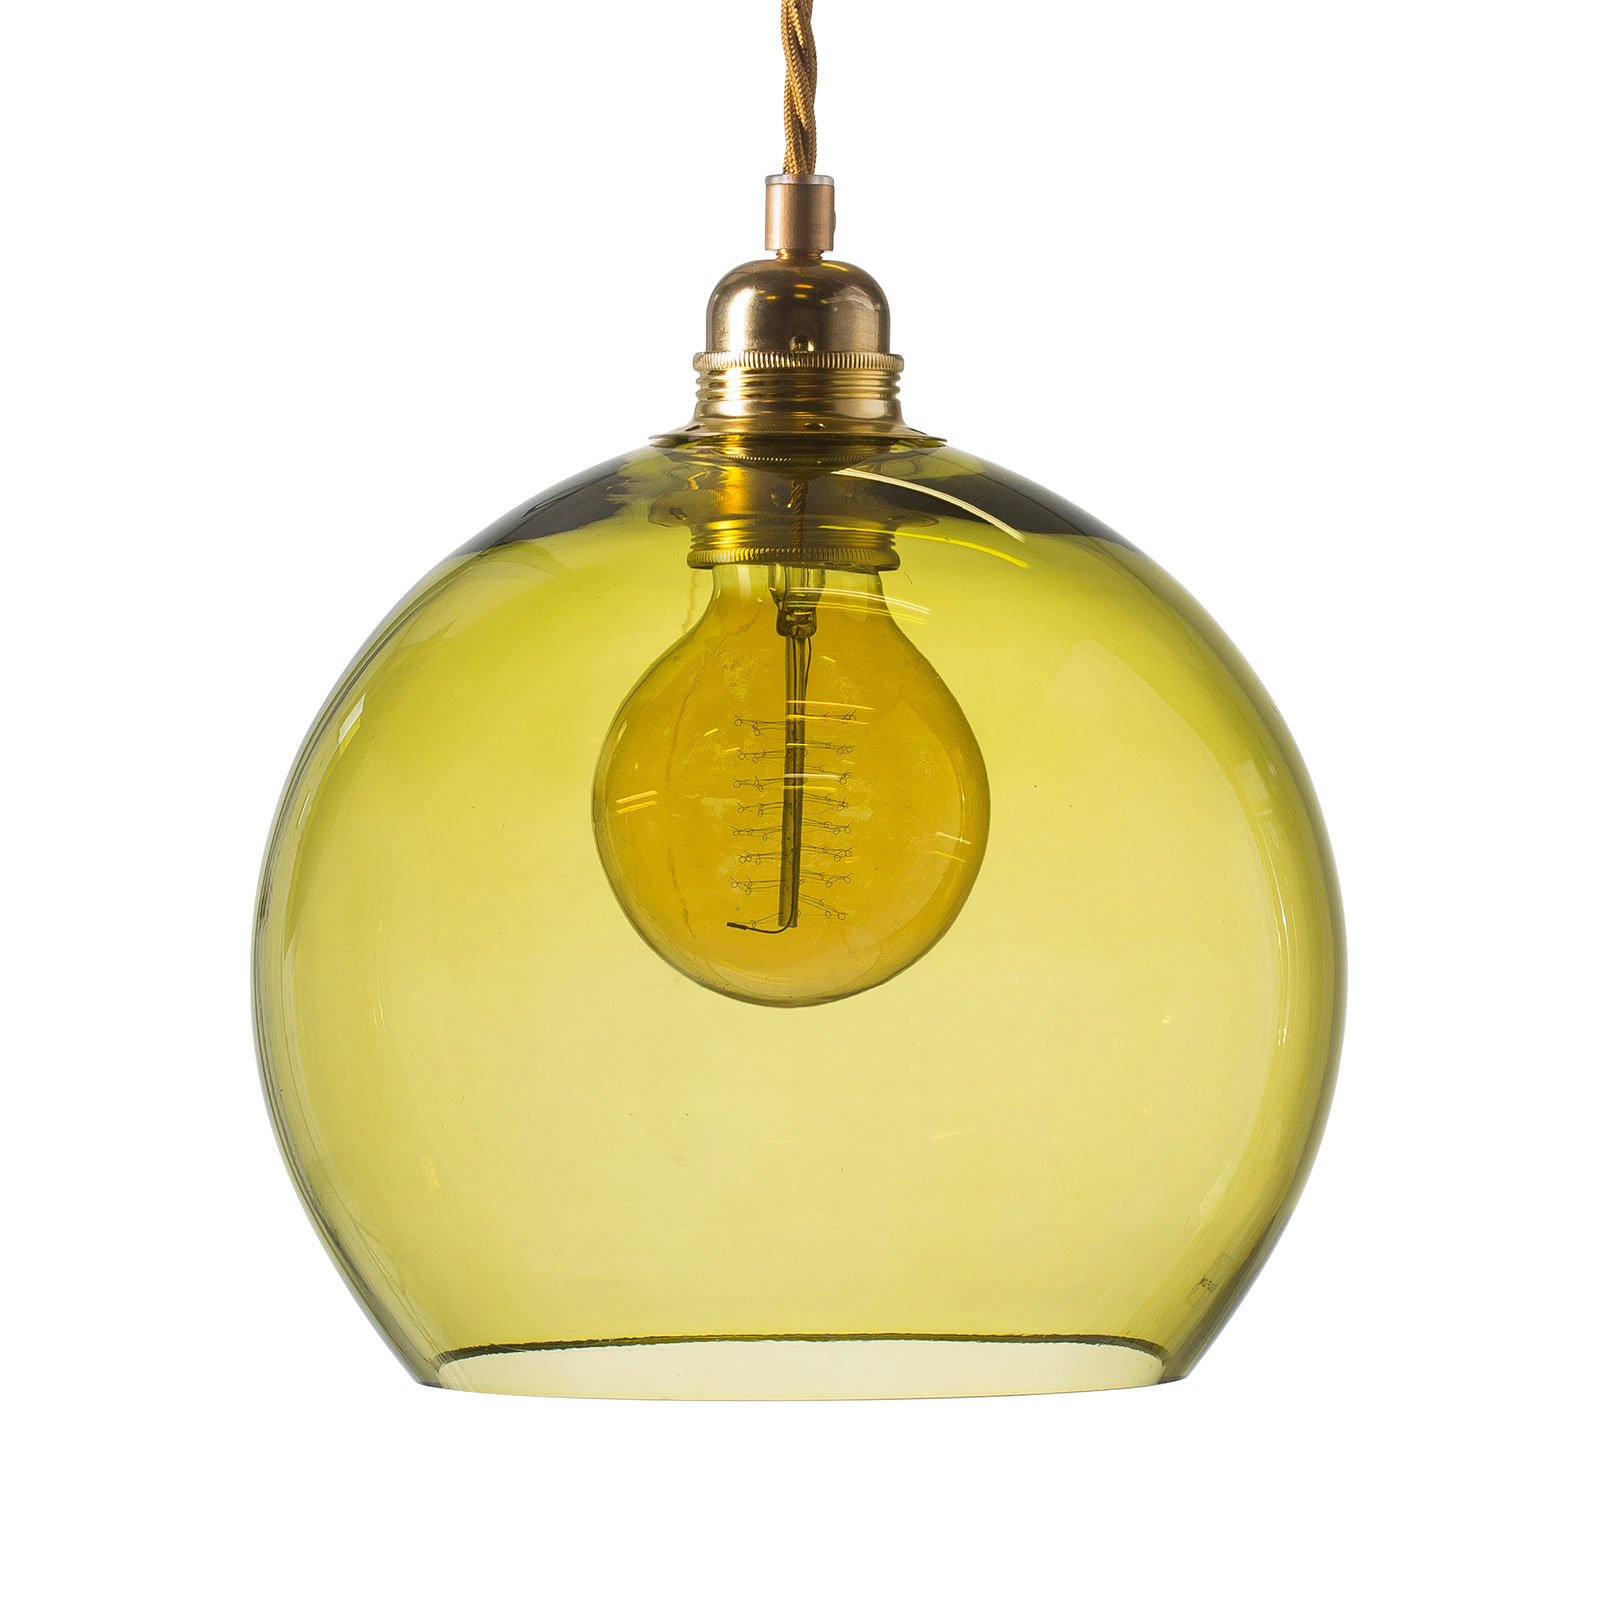 EBB & FLOW Rowan hanglamp goud/olijfgroen Ø 22cm